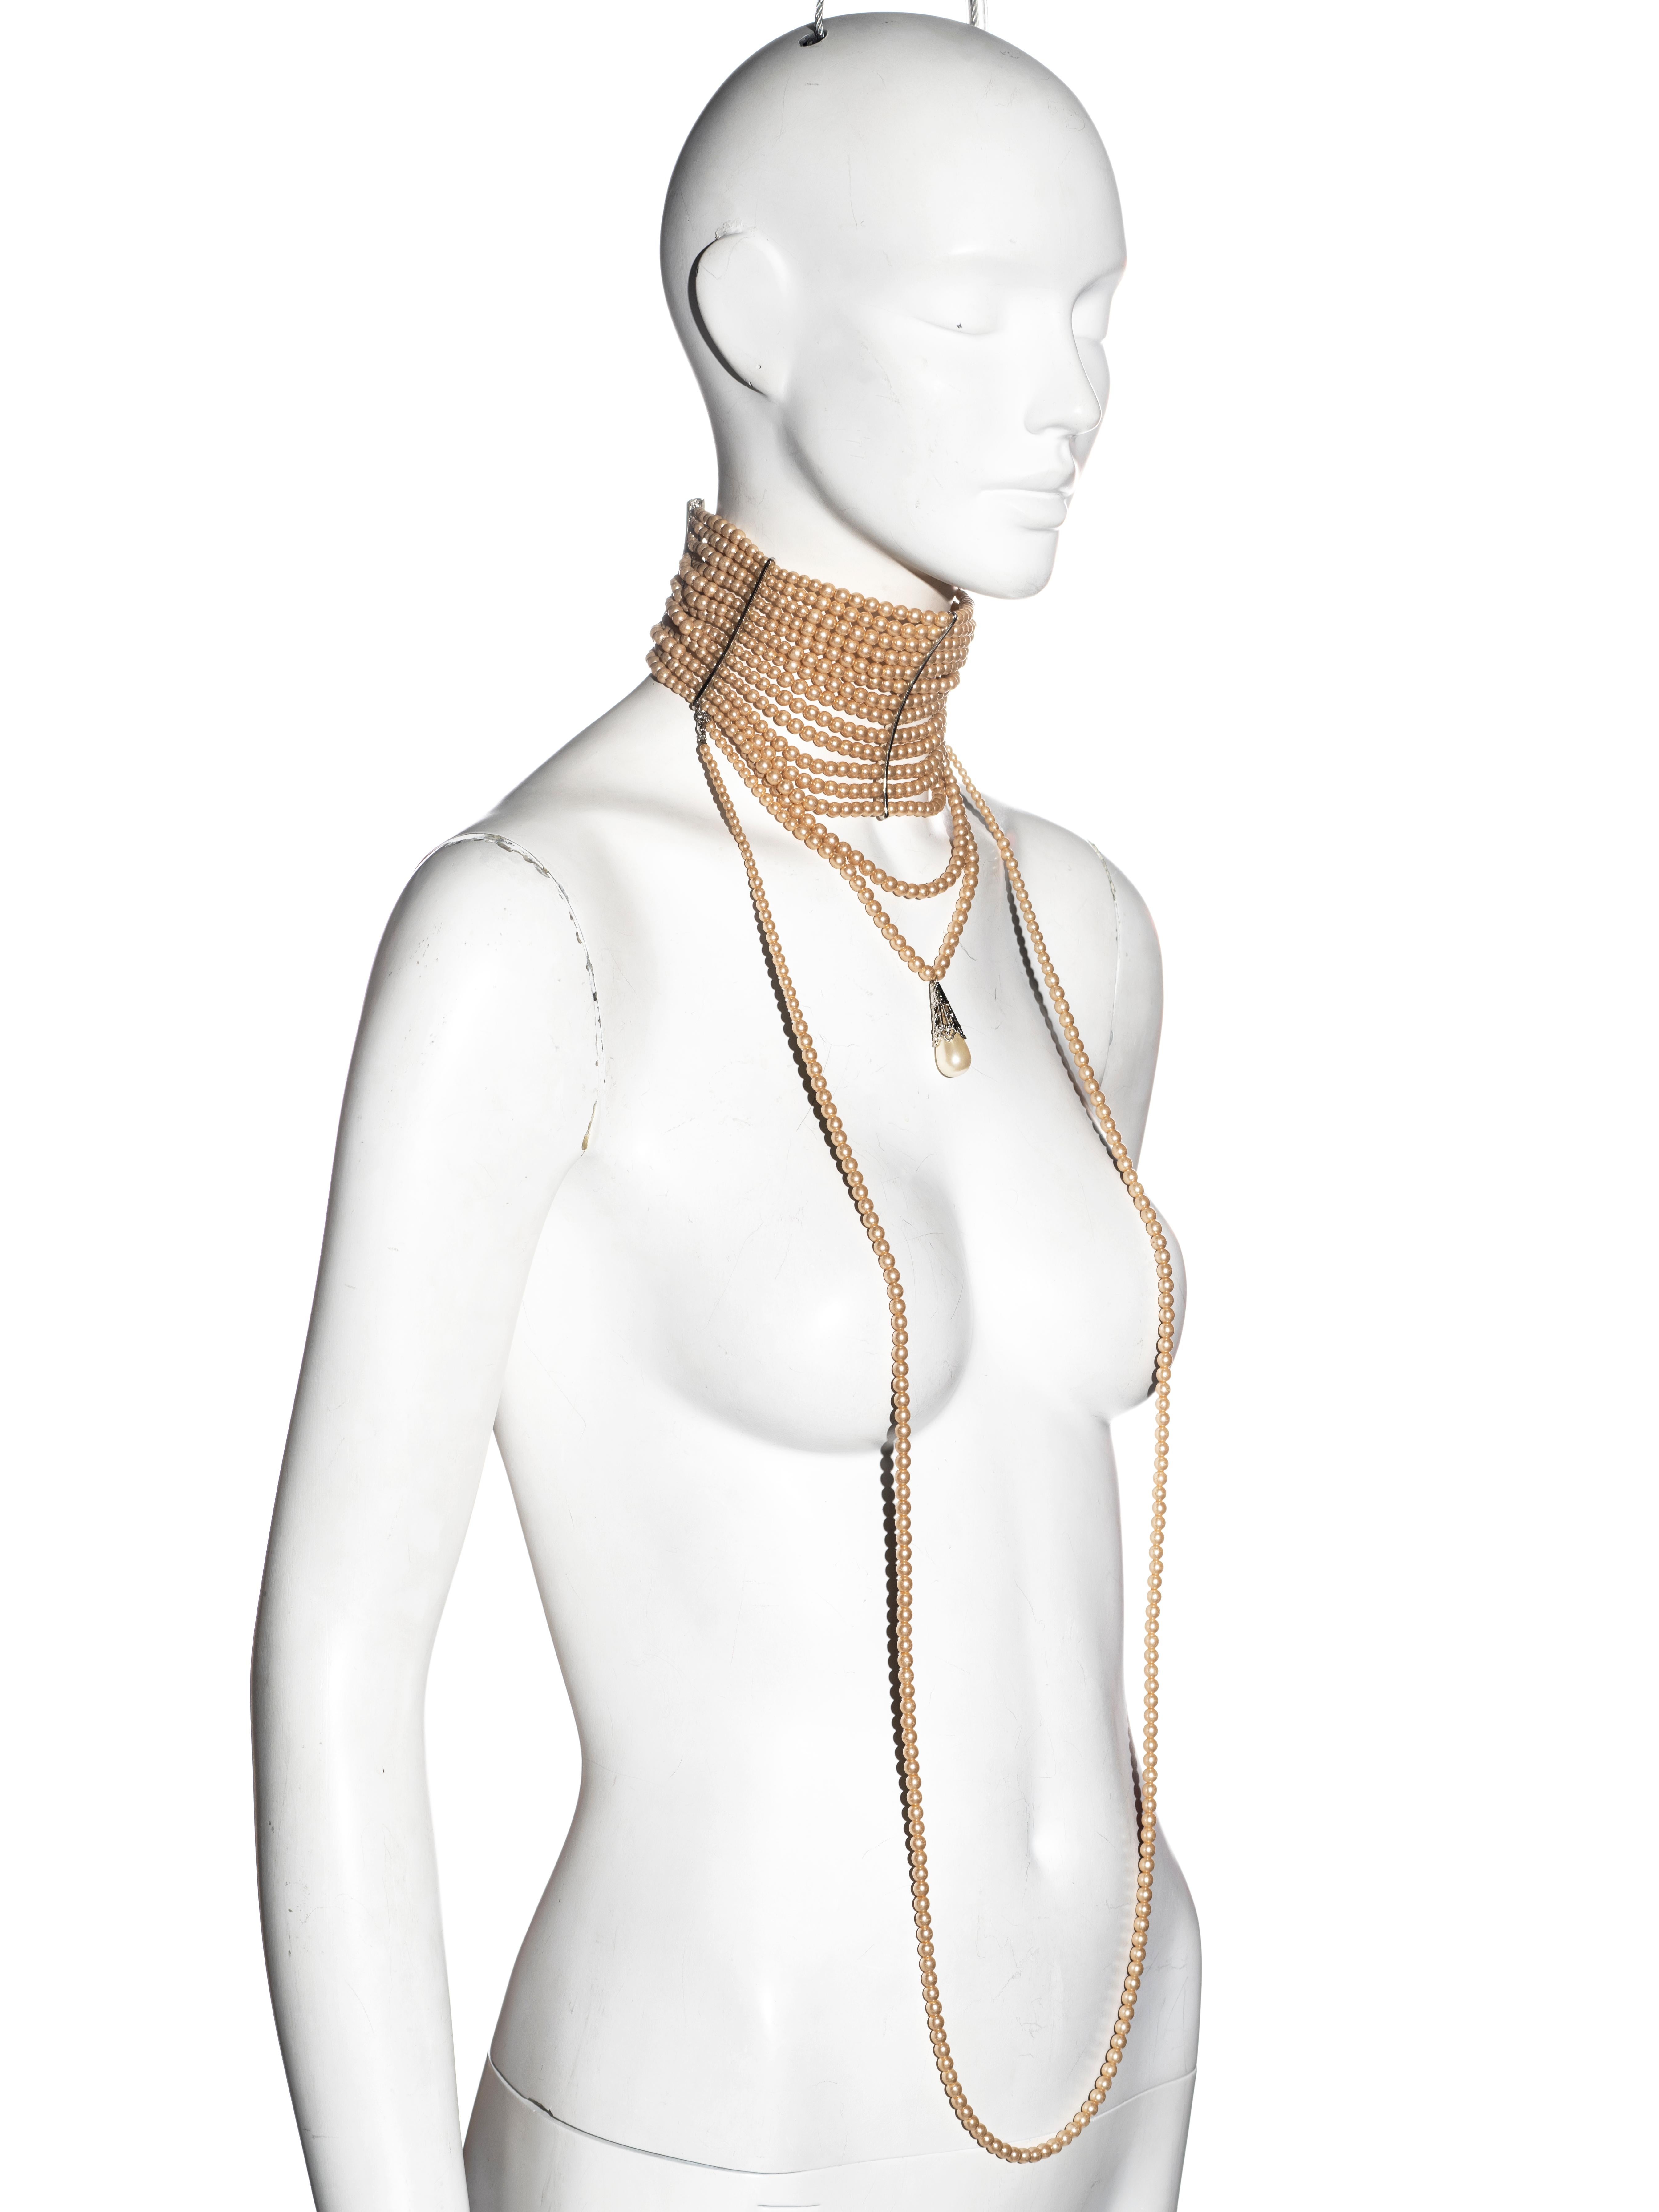 Women's Christian Dior by John Galliano pearl choker necklace, ss 1998